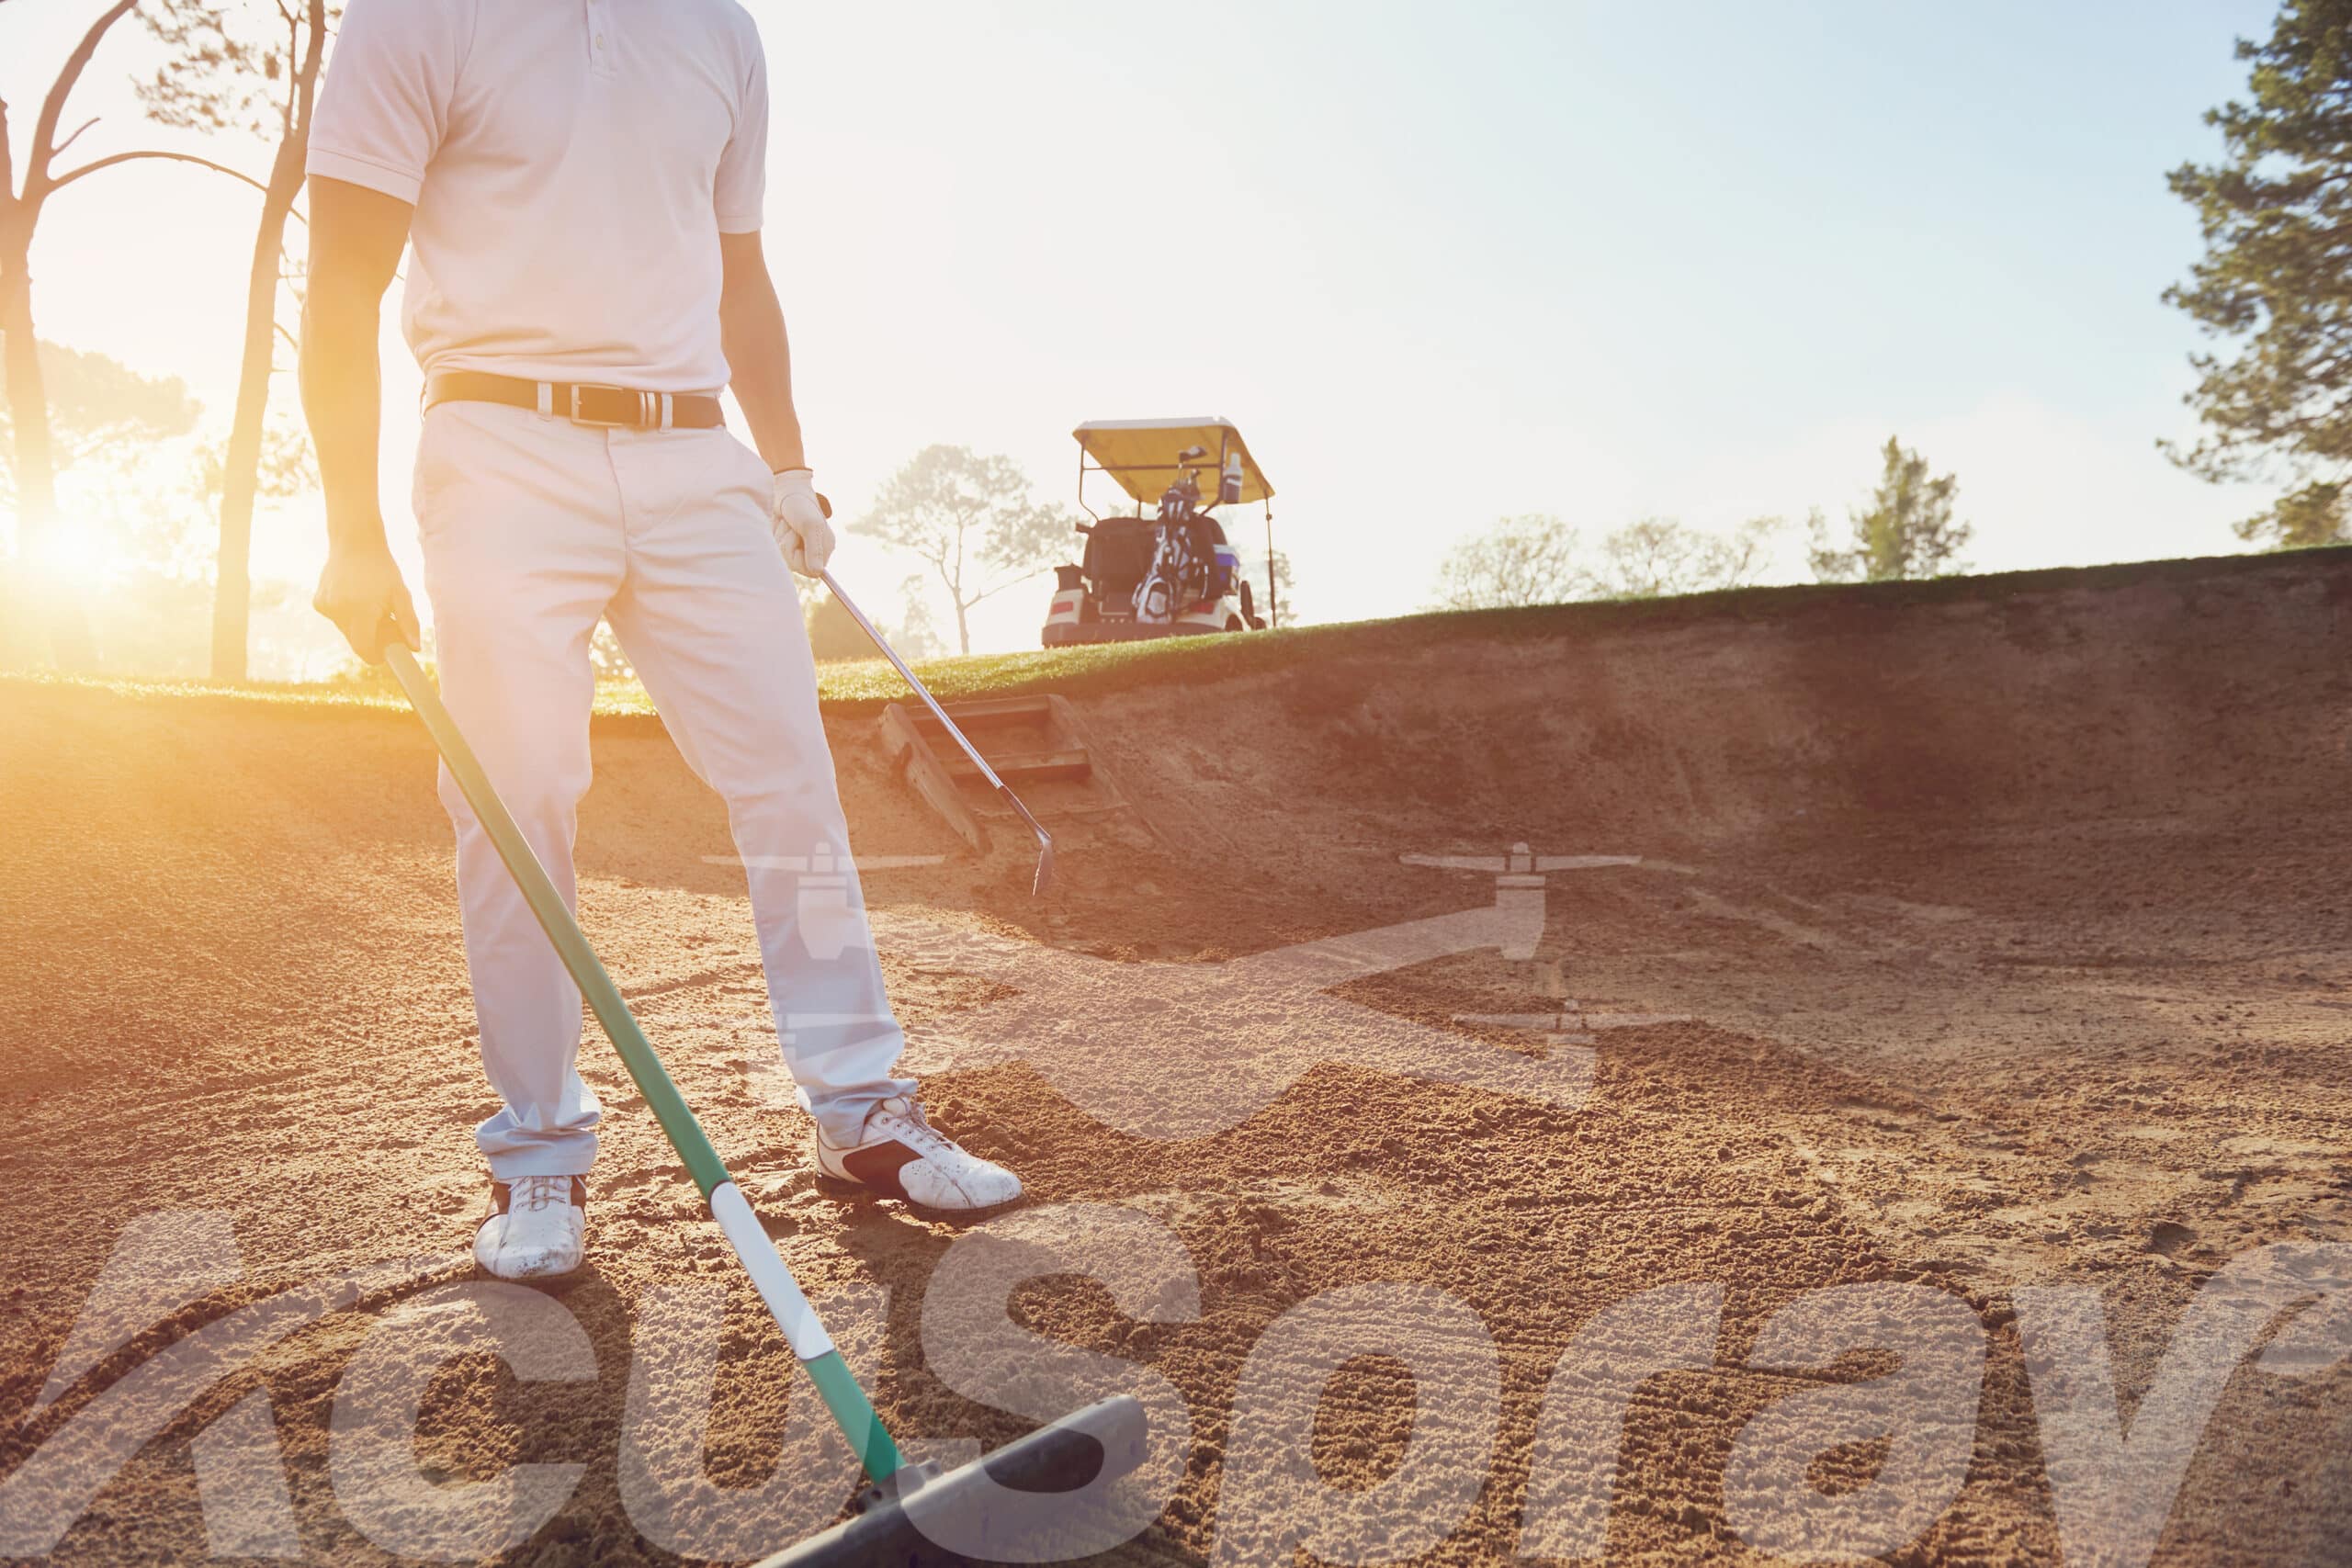 Golf course maintenance worker diligently raking a sand bunker at sunrise.